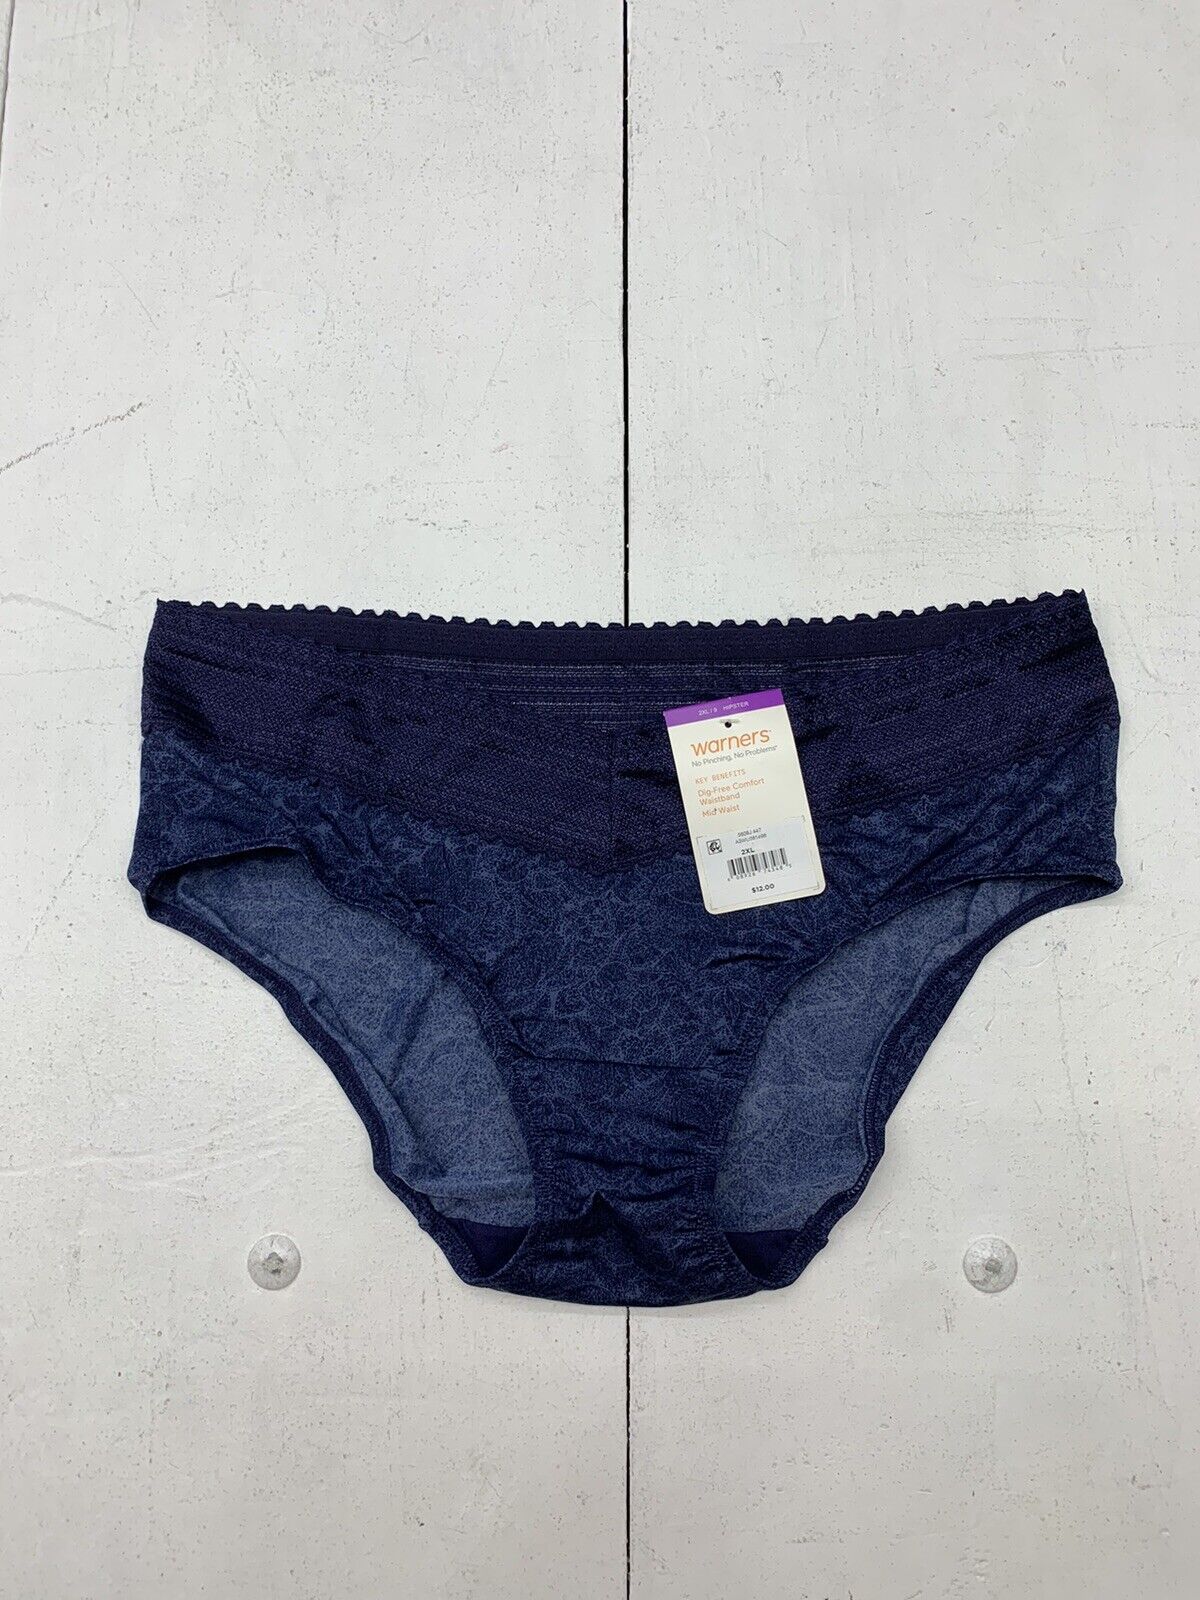 Warners Womens Dark Blue Hipster Panties Size 2XL